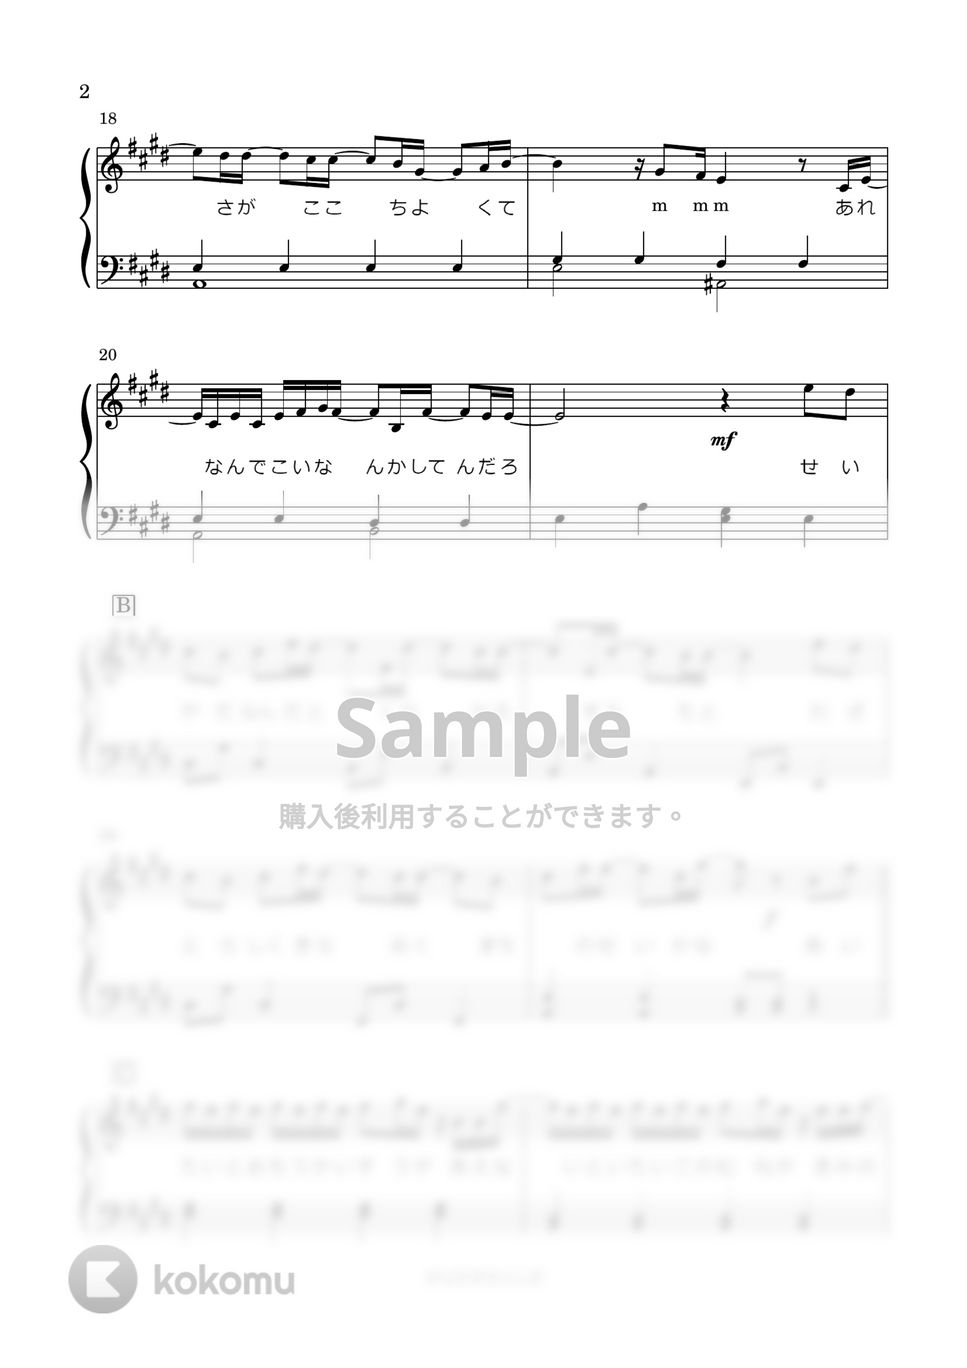 back number - クリスマスソング (歌詞付き) by はみんぐのかんたん楽譜